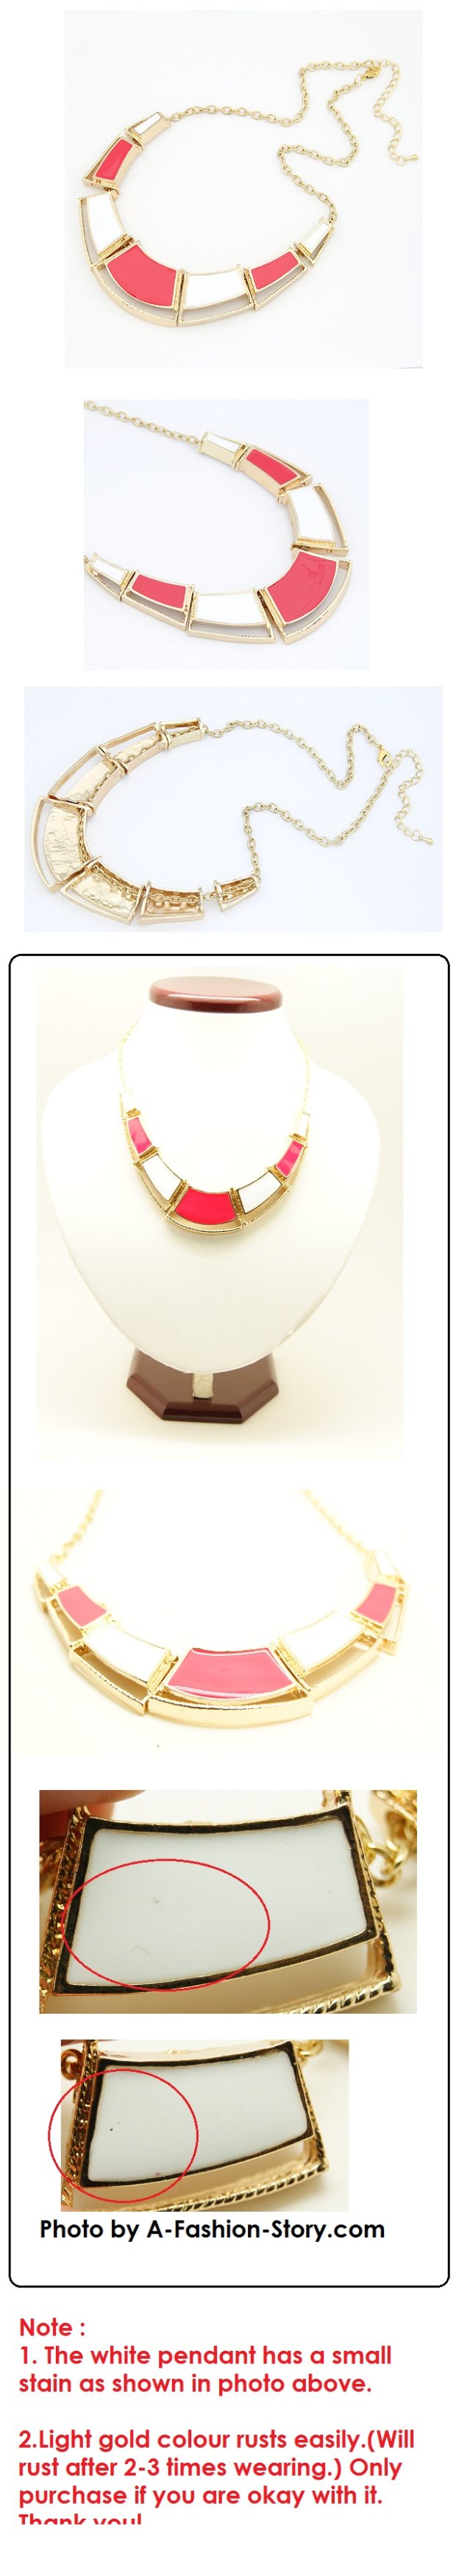 C11010150 Malaysia choker necklace online shop blogshop wholesal